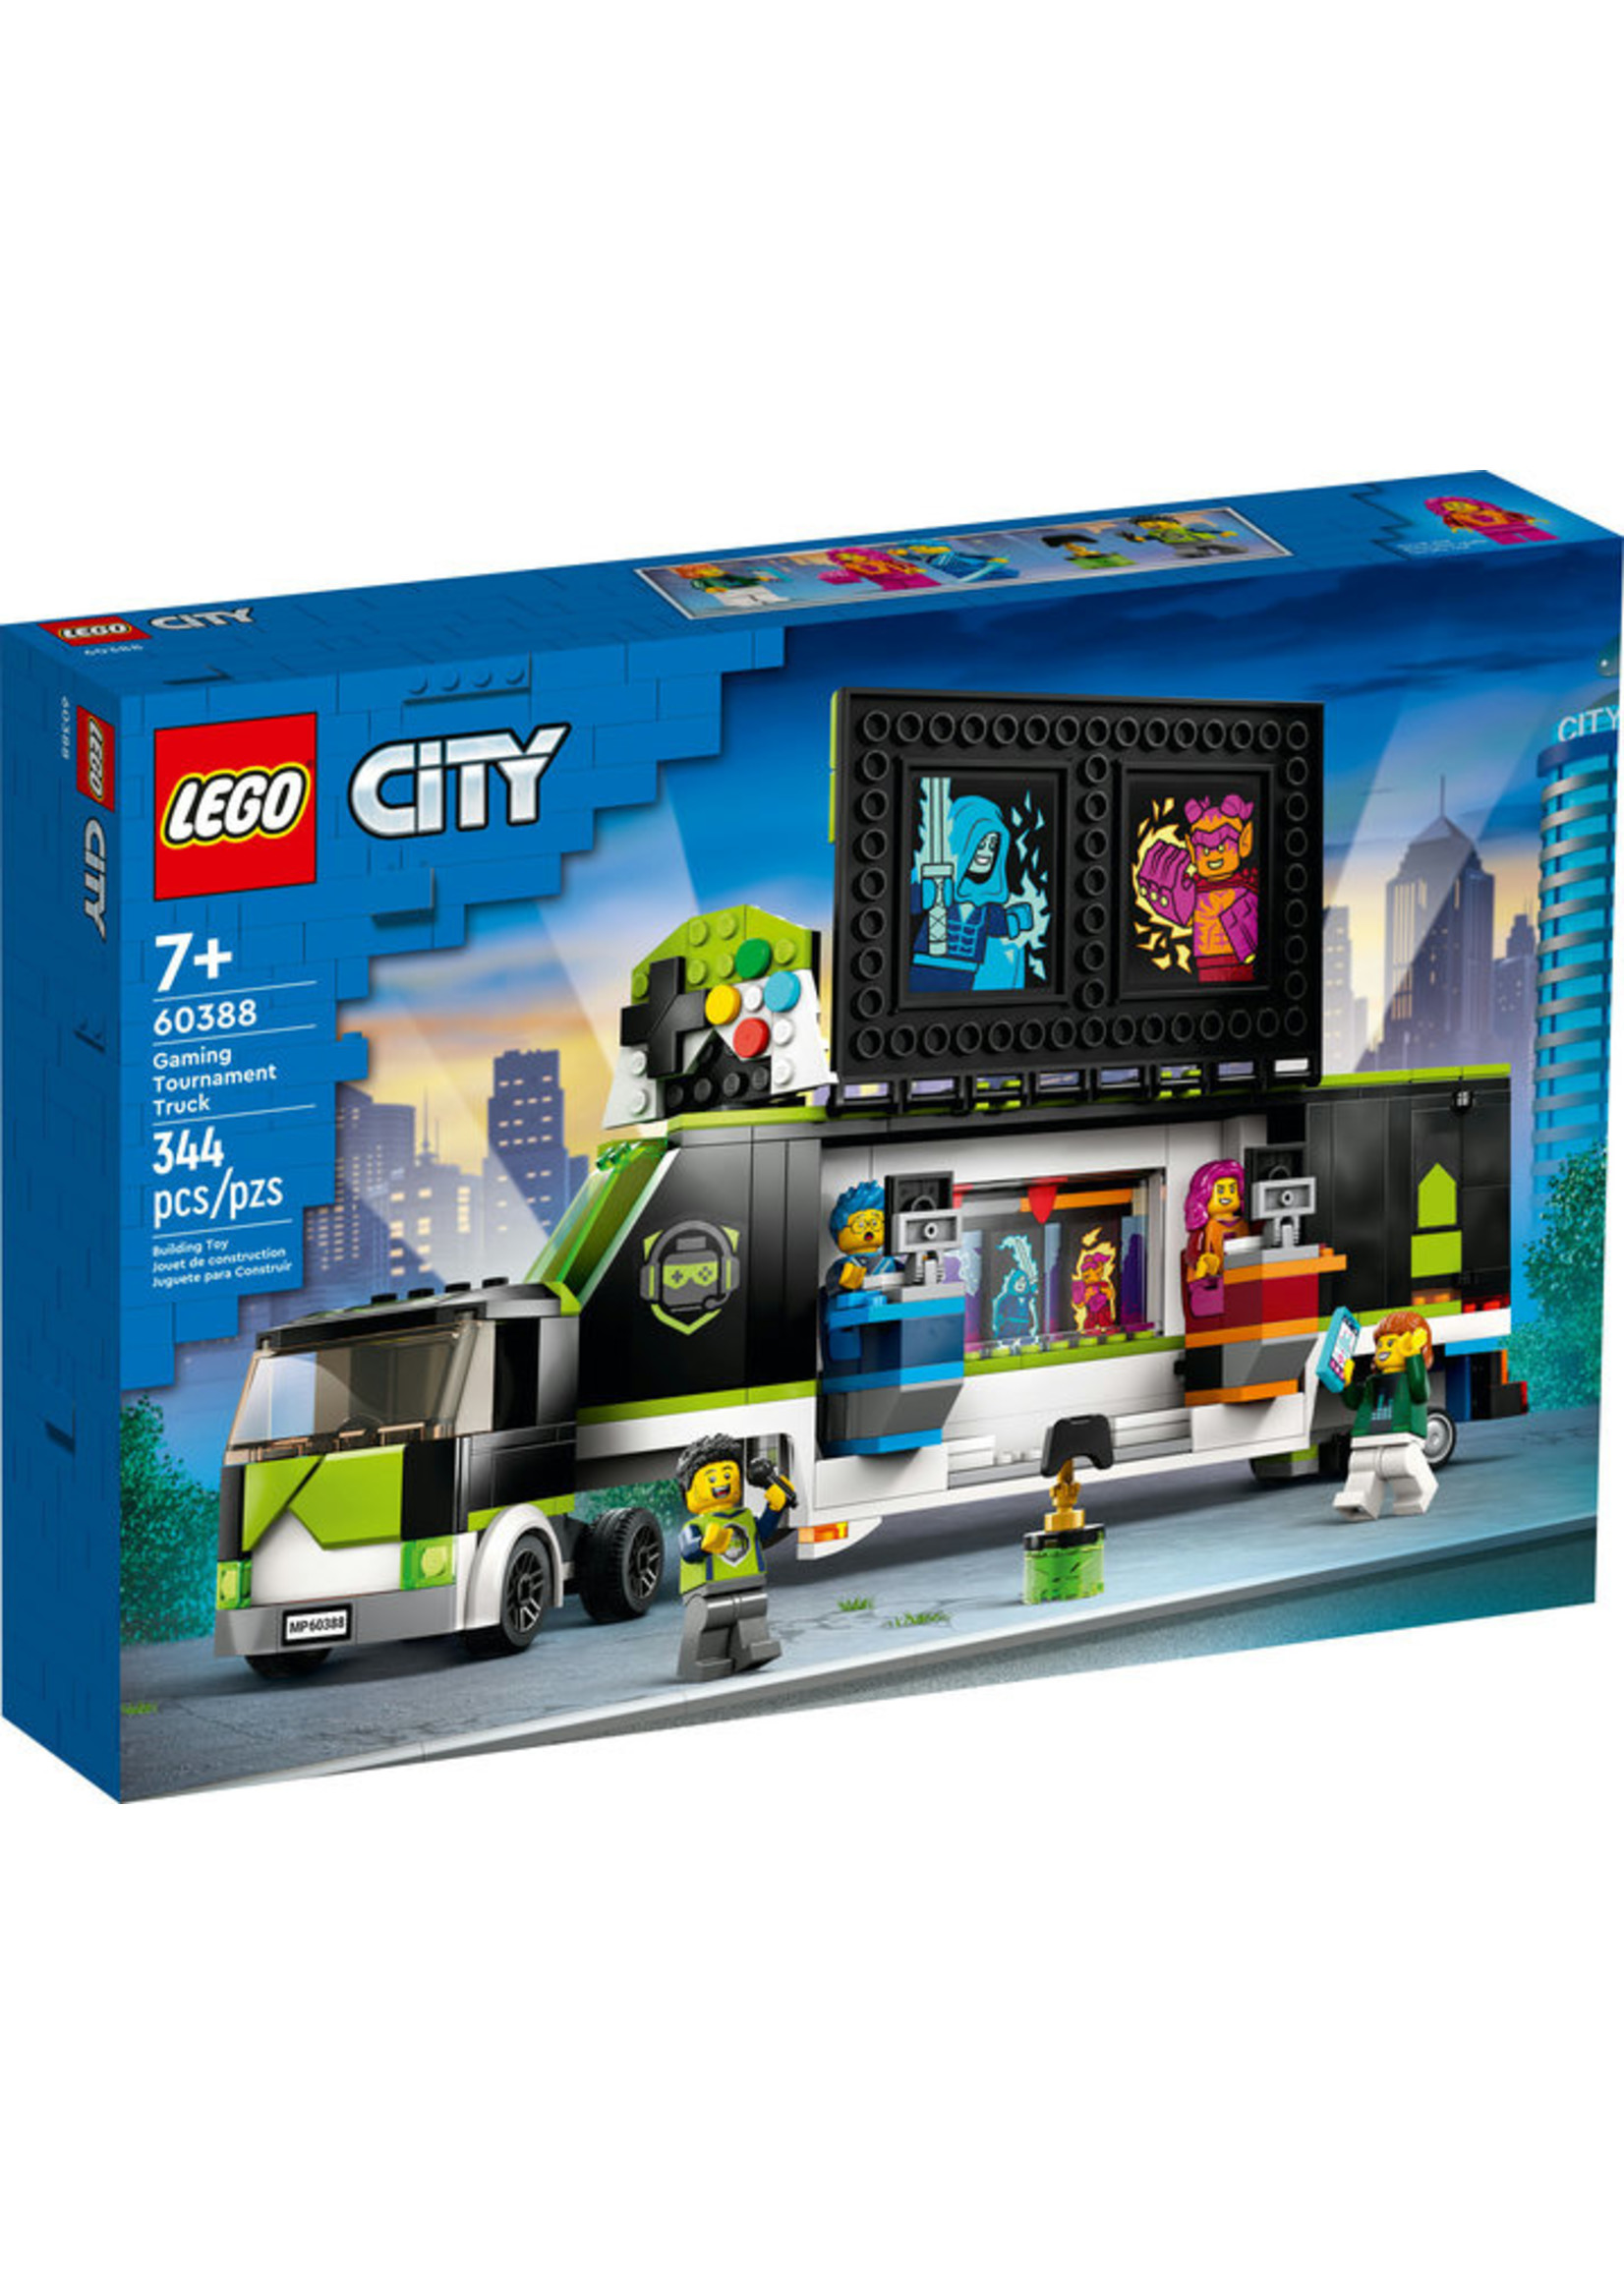 LEGO 60388 - Gaming Tournament Truck